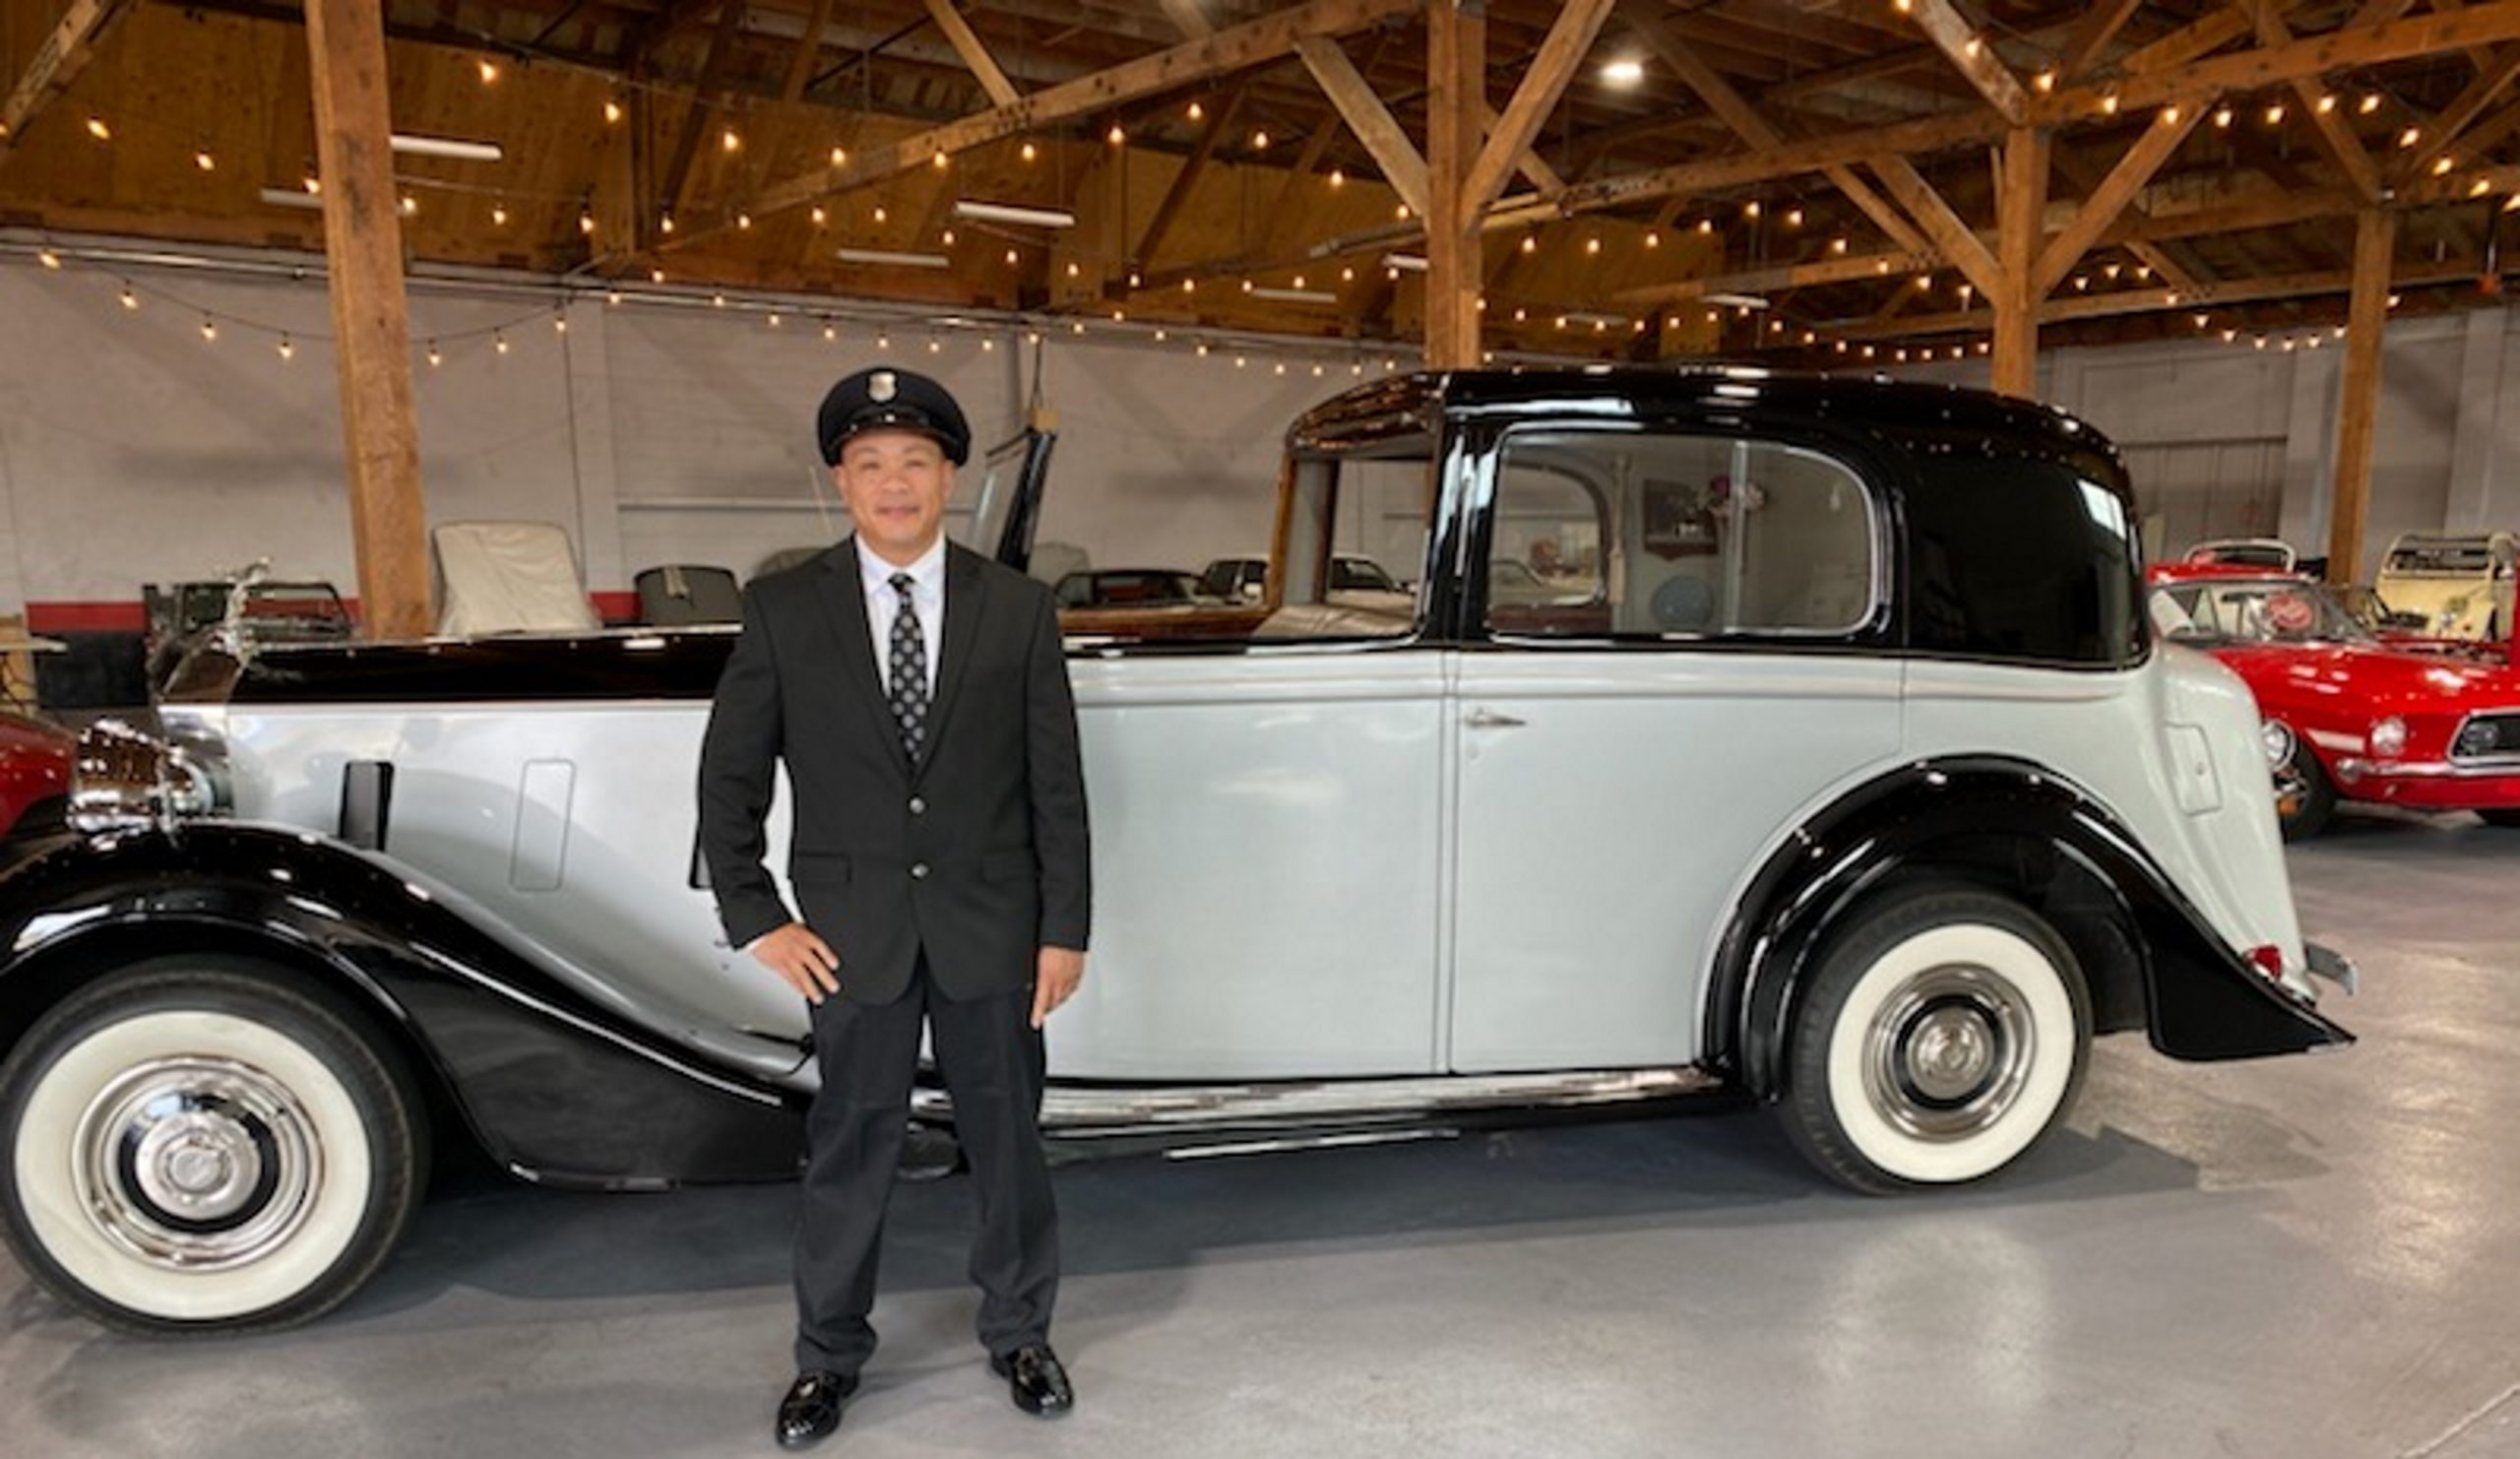 chauffeur standing next to 1938 Rolls Royce Phantom III